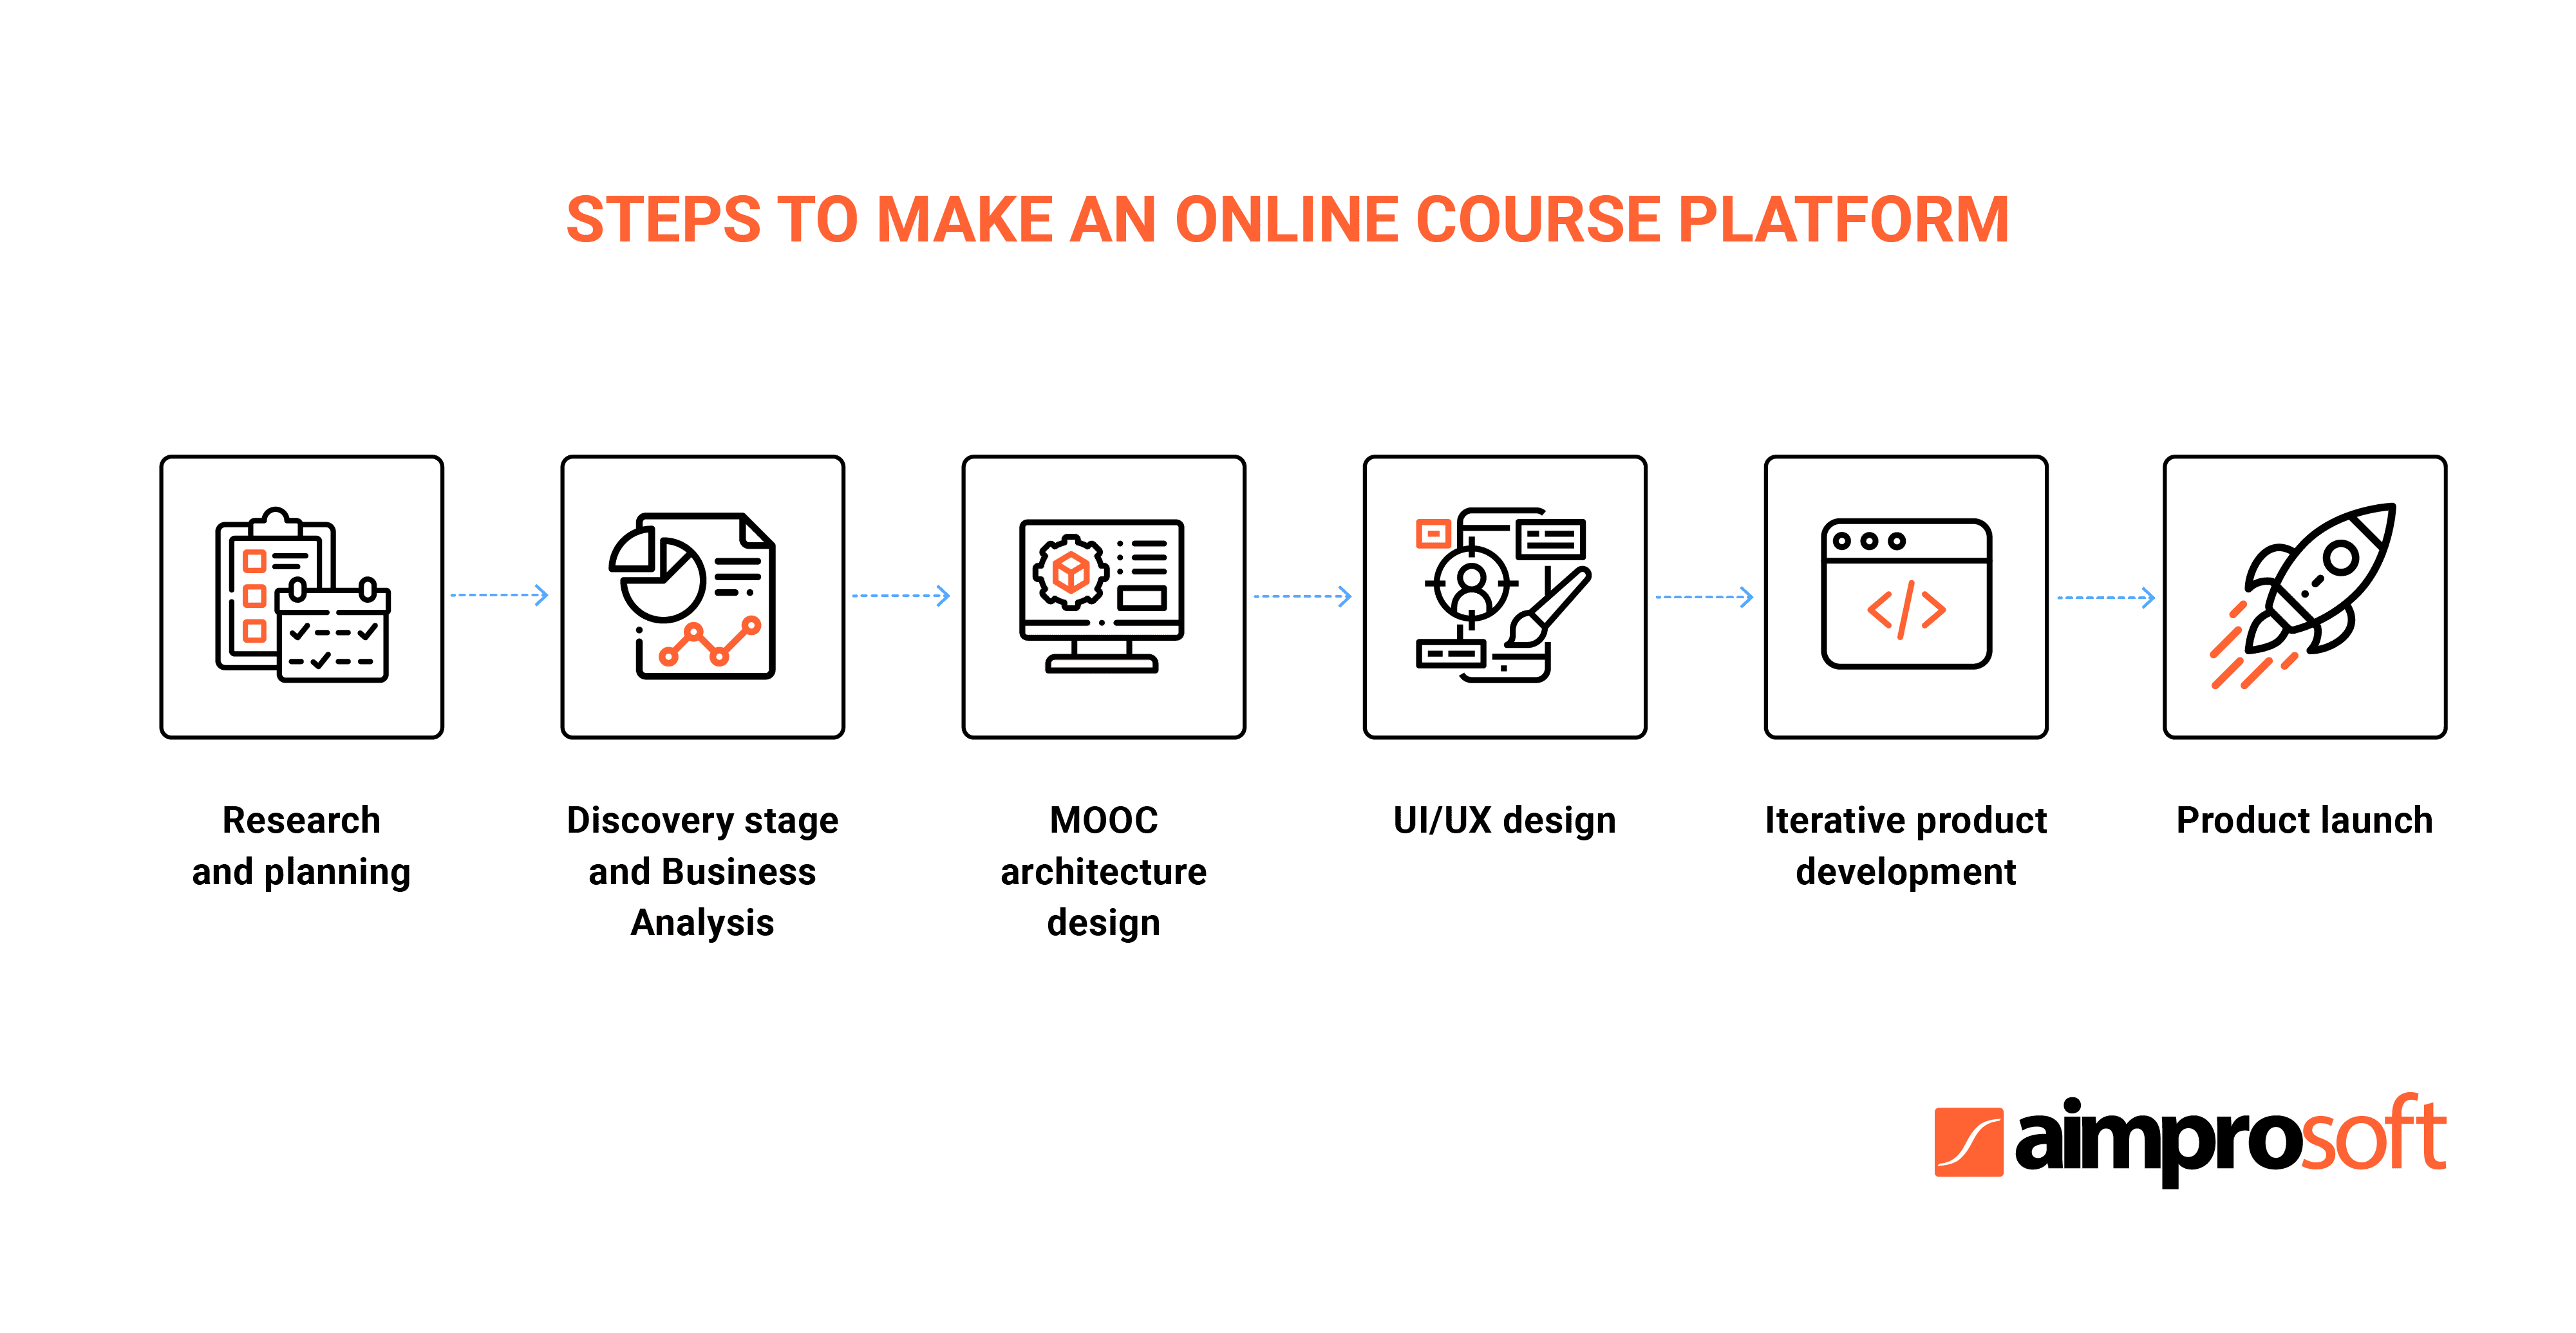 Steps to make an online course platform like edX